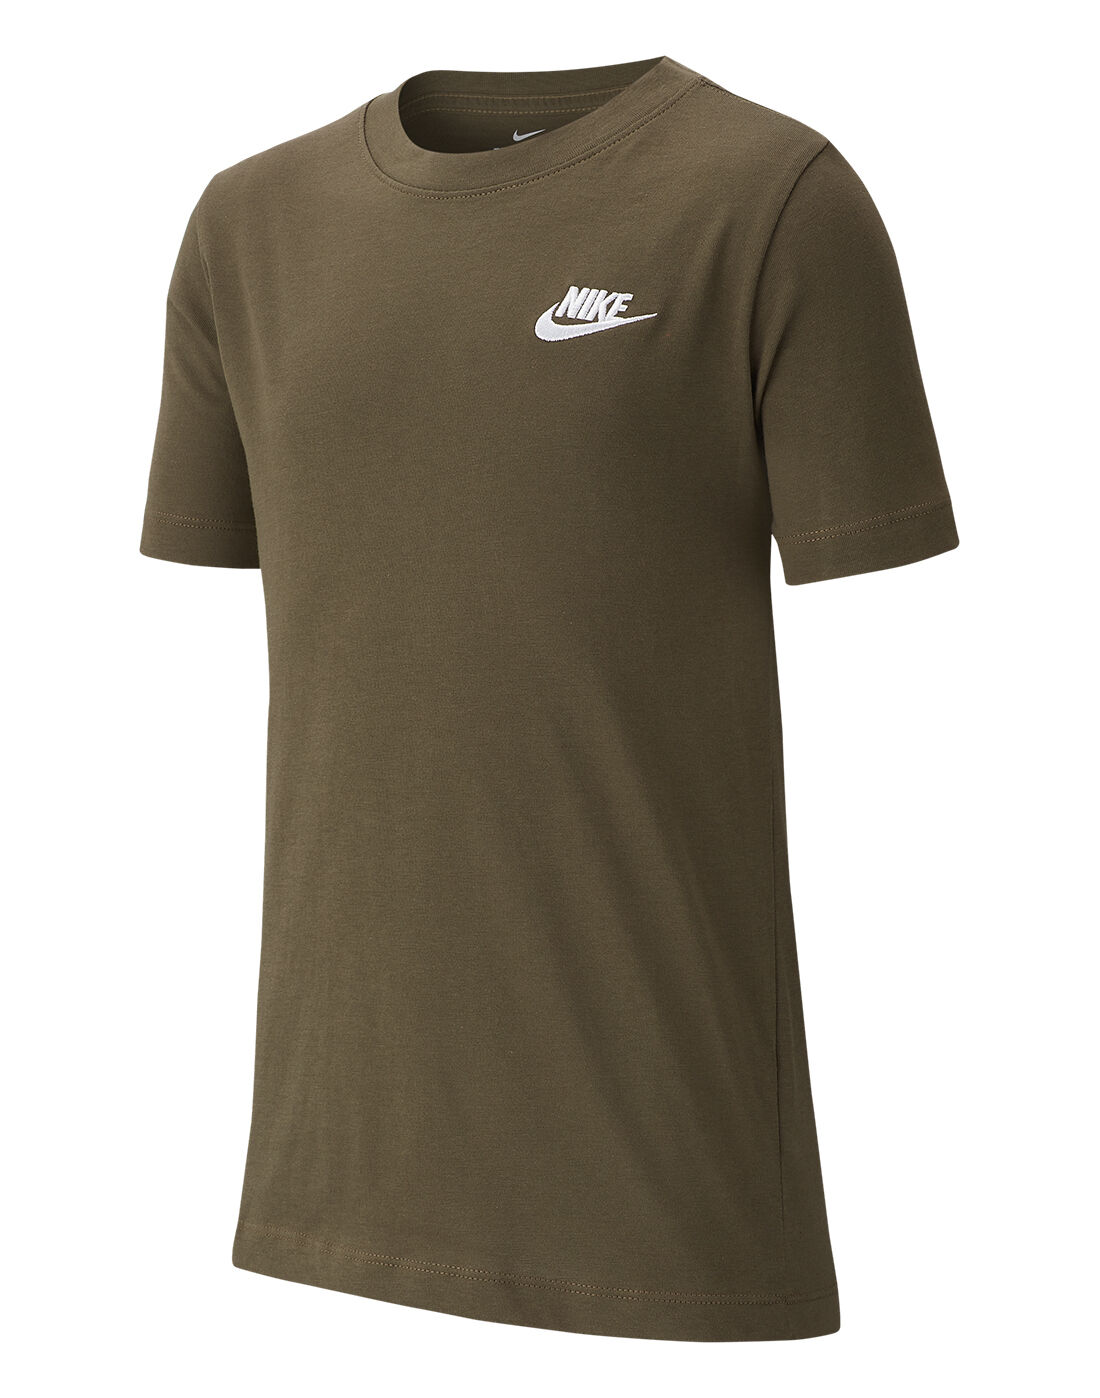 Boy's Khaki Green Nike Futura T-Shirt 